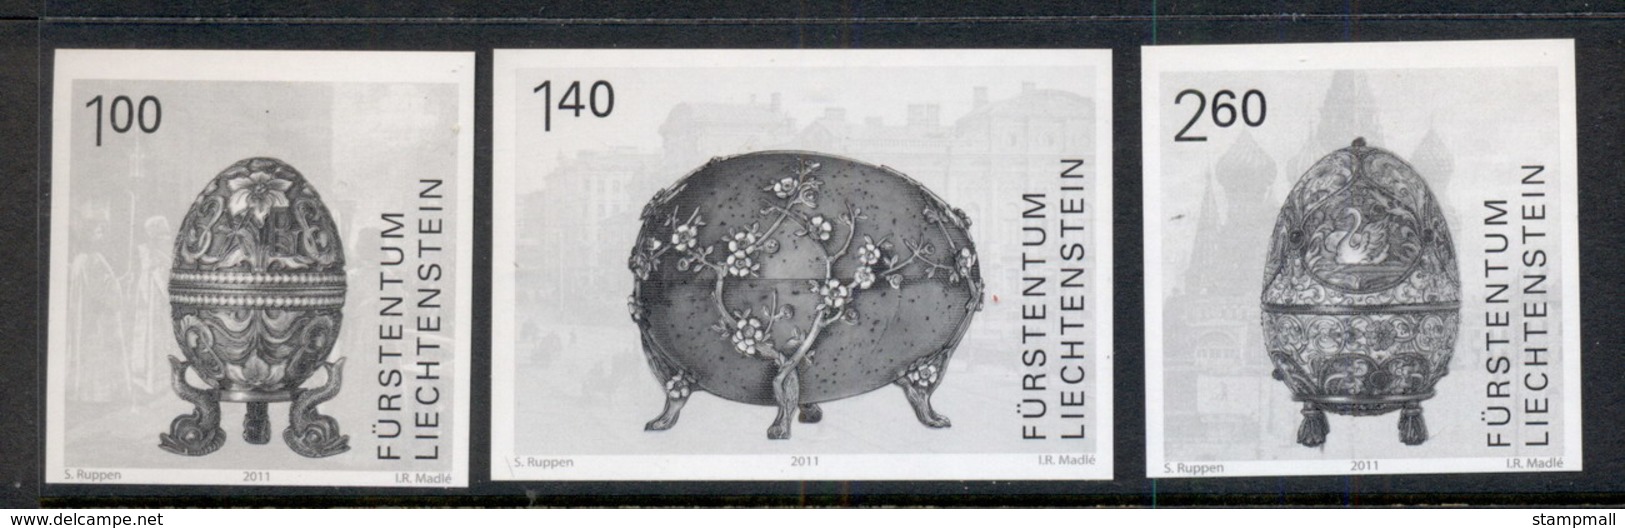 Liechtenstein 2011 Easter Eggs, Black Print IMPERF MUH - Unused Stamps